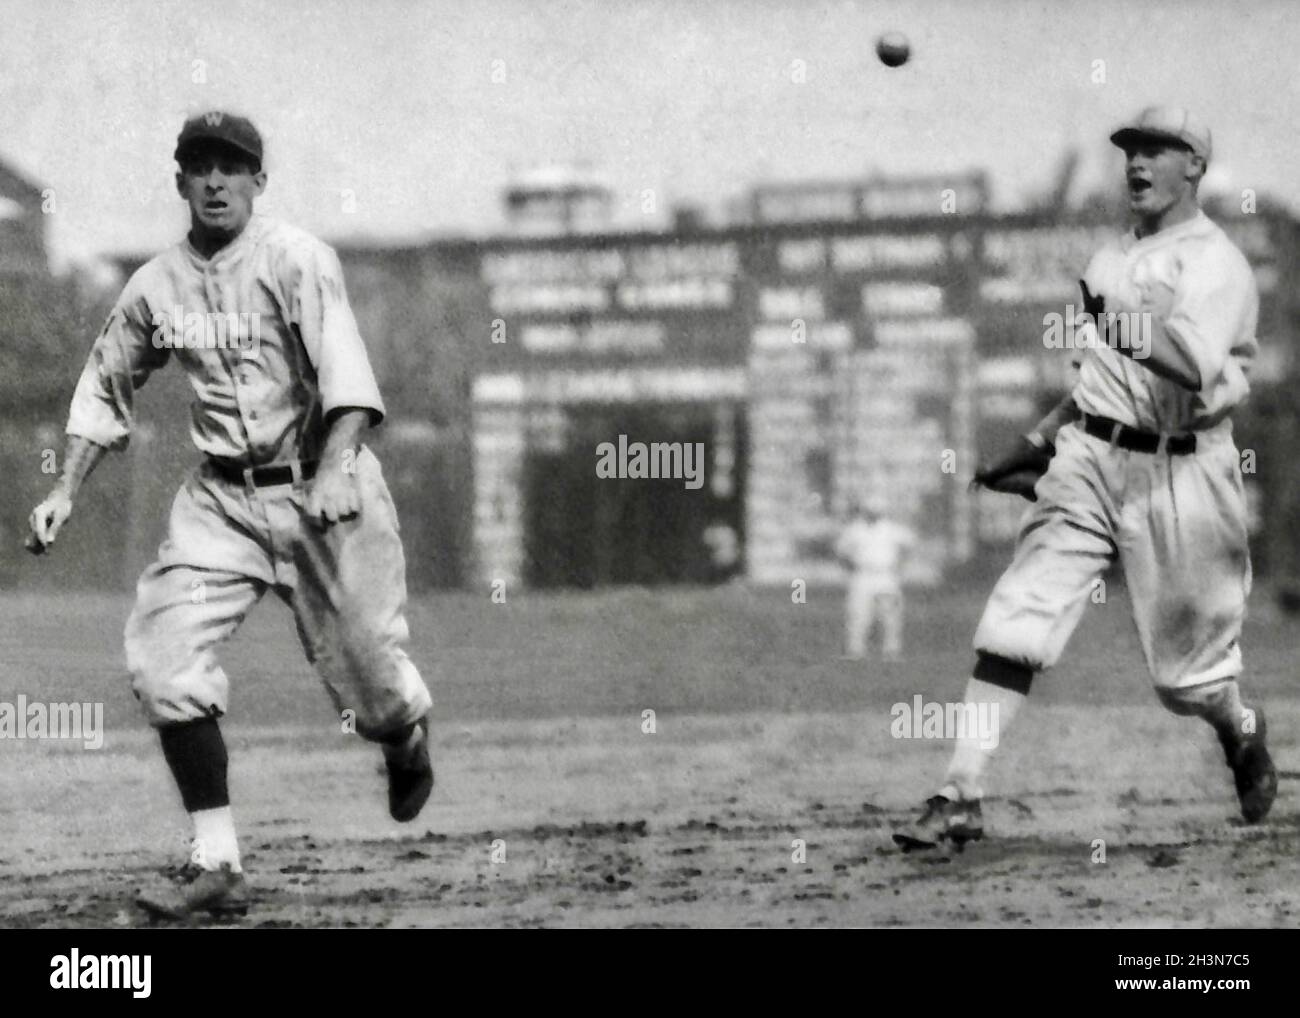  HistoricalFindings Photo: Washington Senators Baseball Team, Baseball Players,1909-1932,Sports,Uniform : Sports & Outdoors